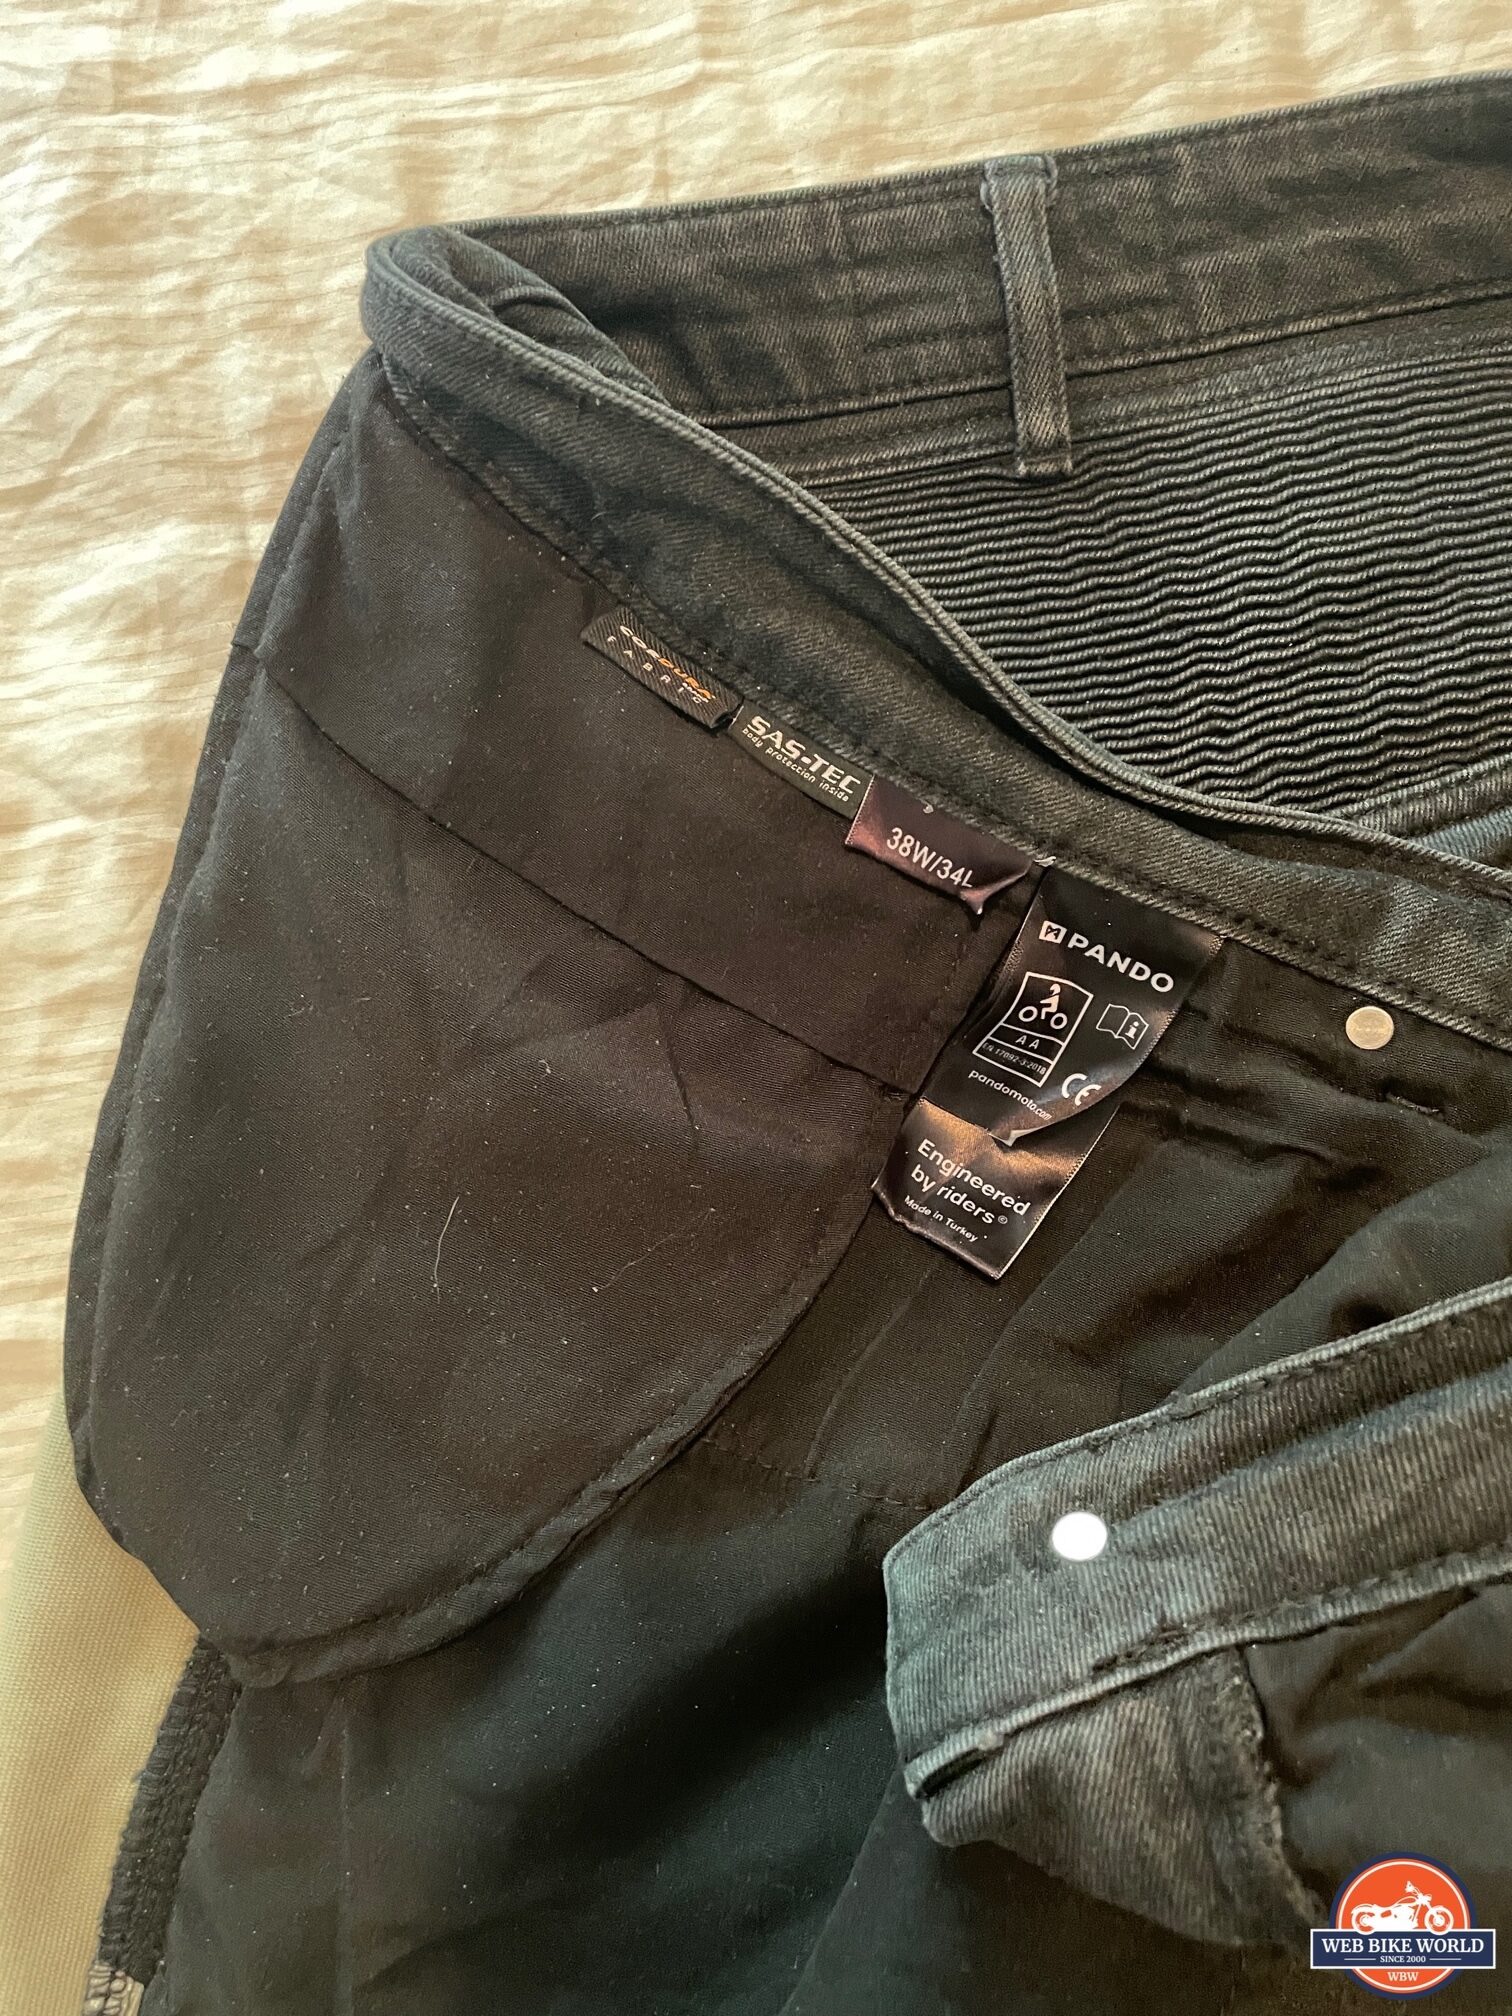 Pando Moto Karl Devil 9 Jeans hip armor pockets